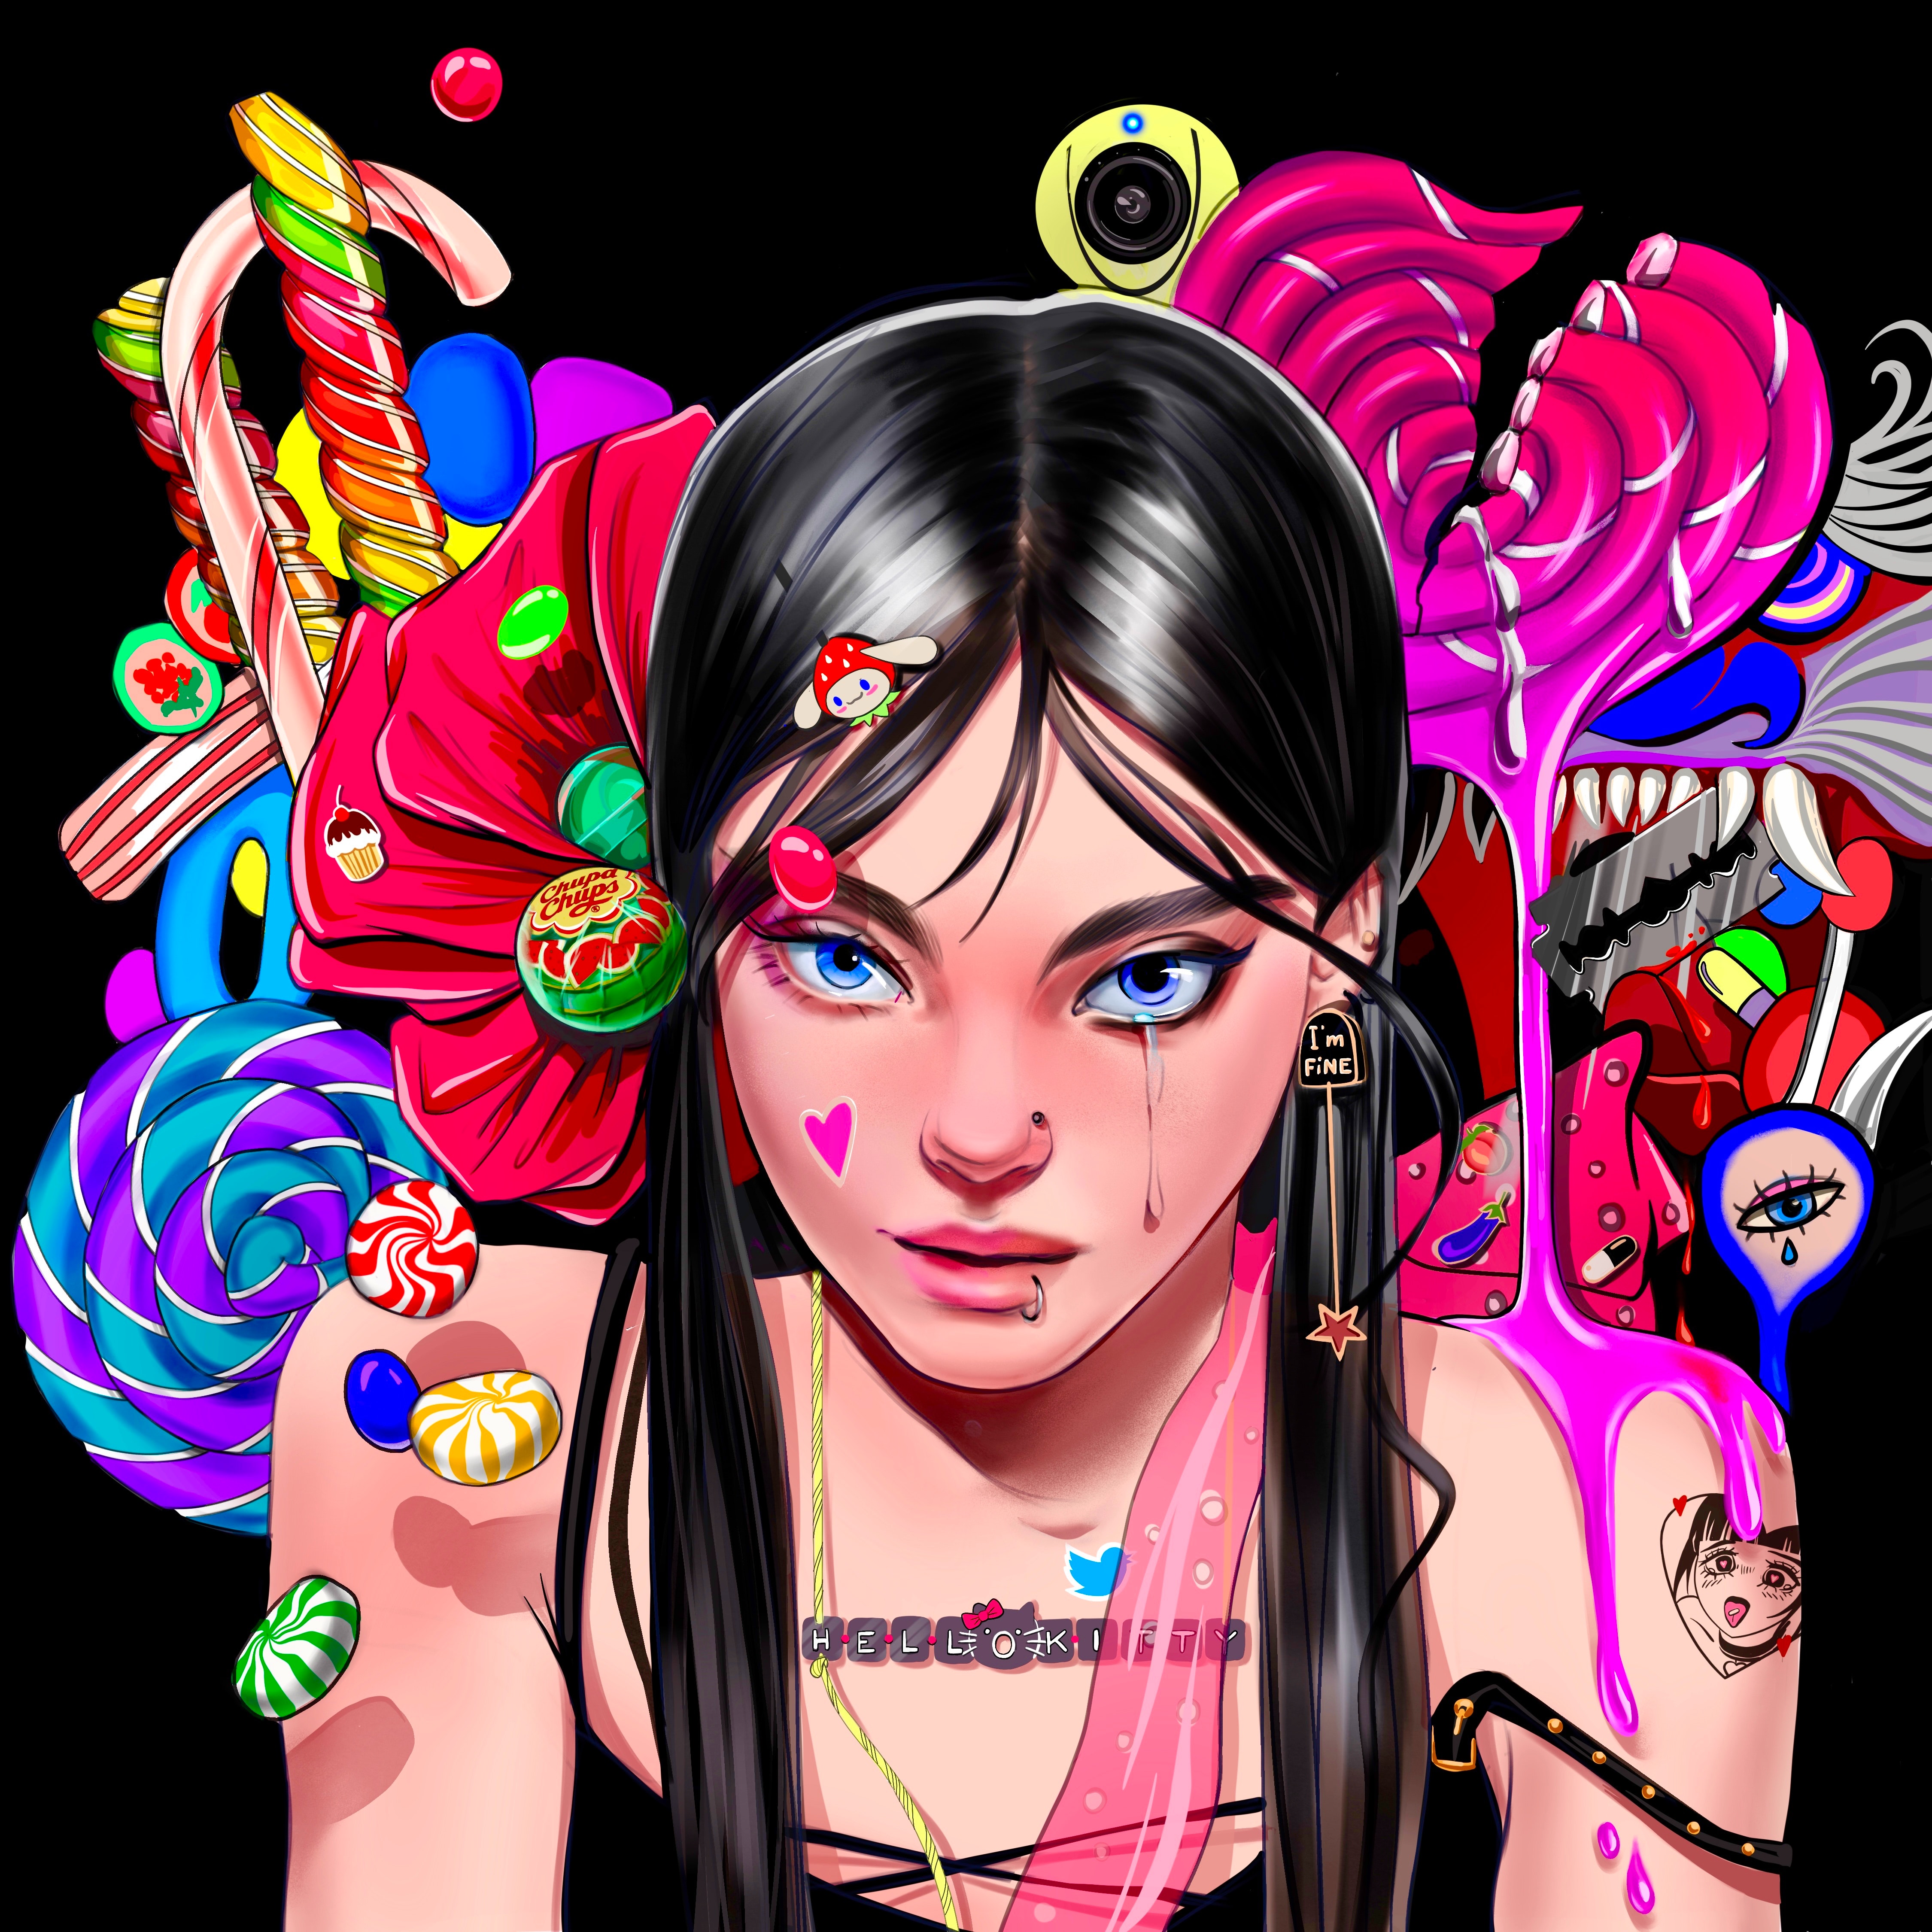 Digital Digital Art Artwork Render Women Looking At Viewer Fantasy Art Fantasy Girl Blue Eyes Dark H 4500x4500